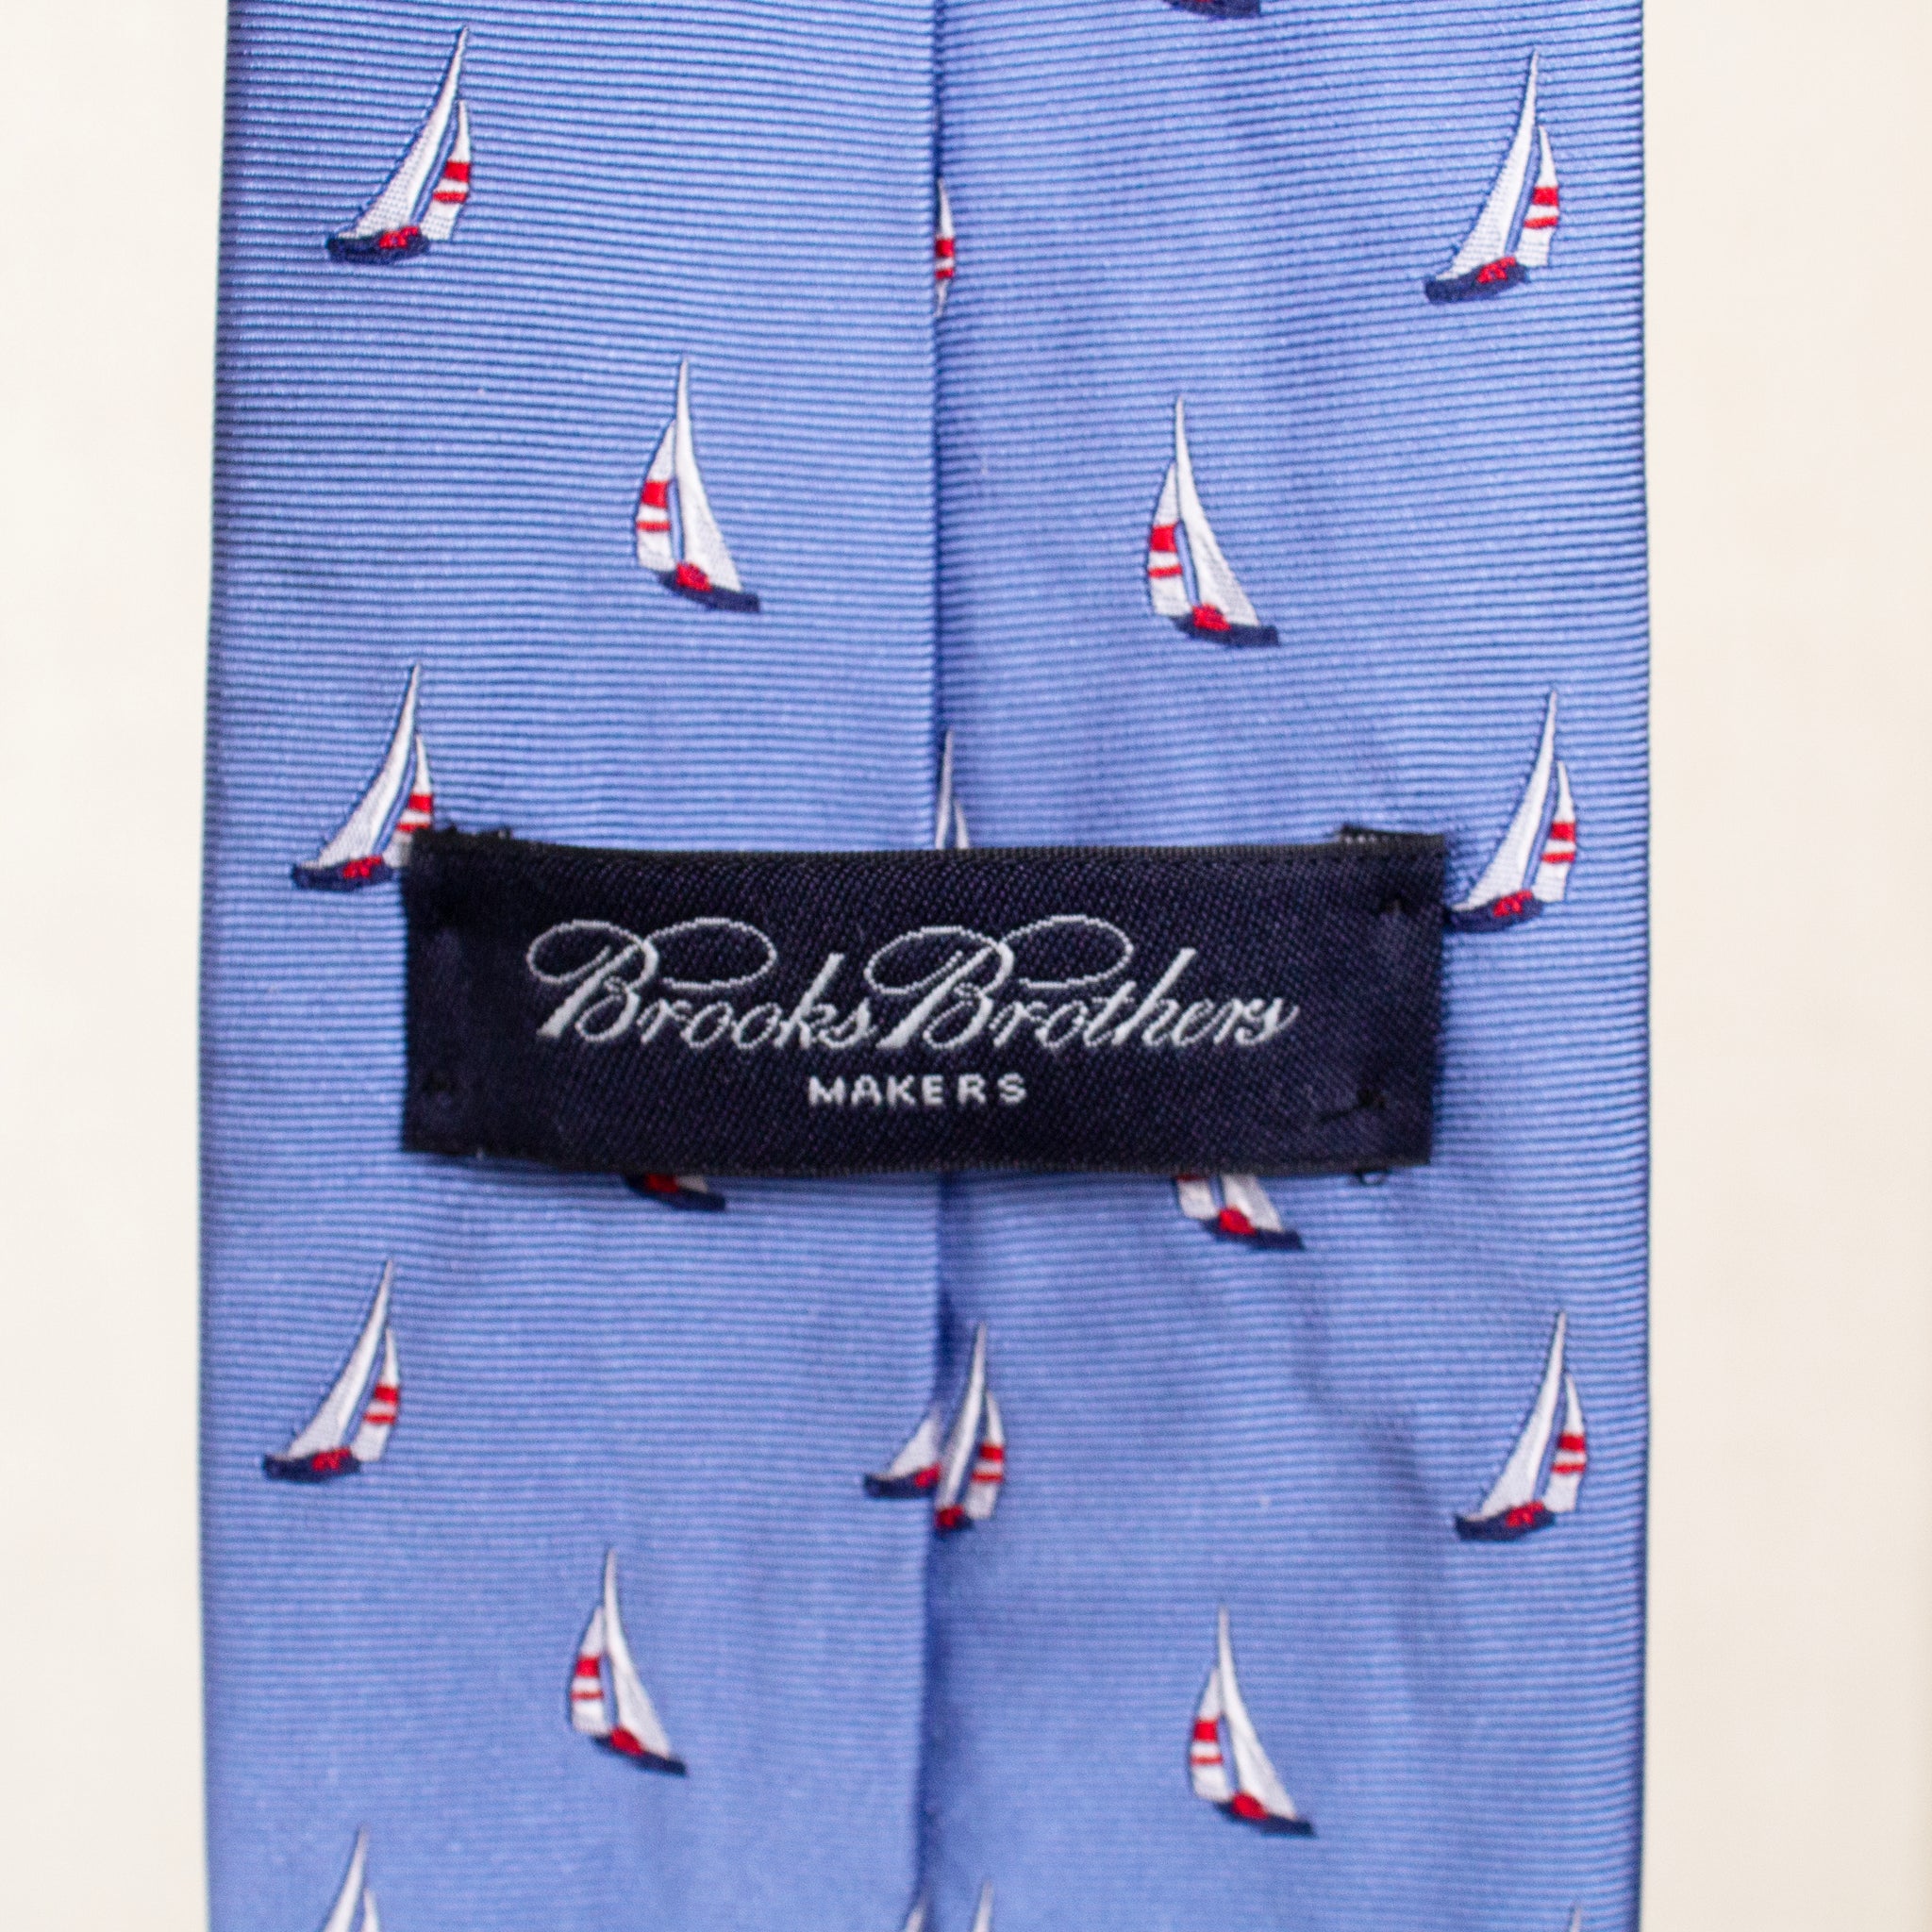 Brooks Brothers Sailboat Tie